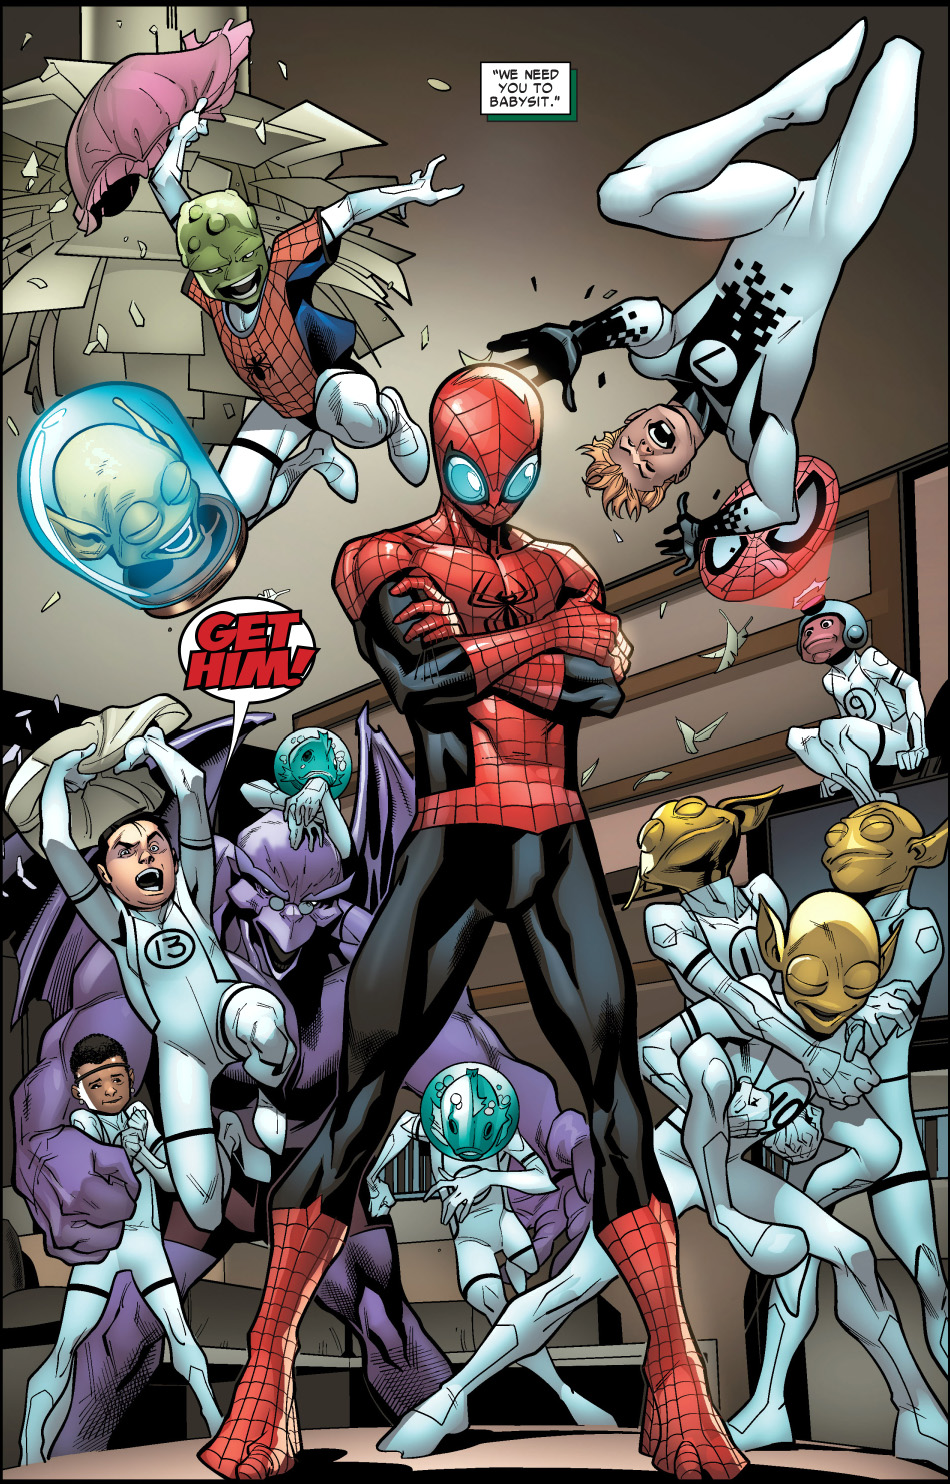 superior spider-man babysits the future foundation